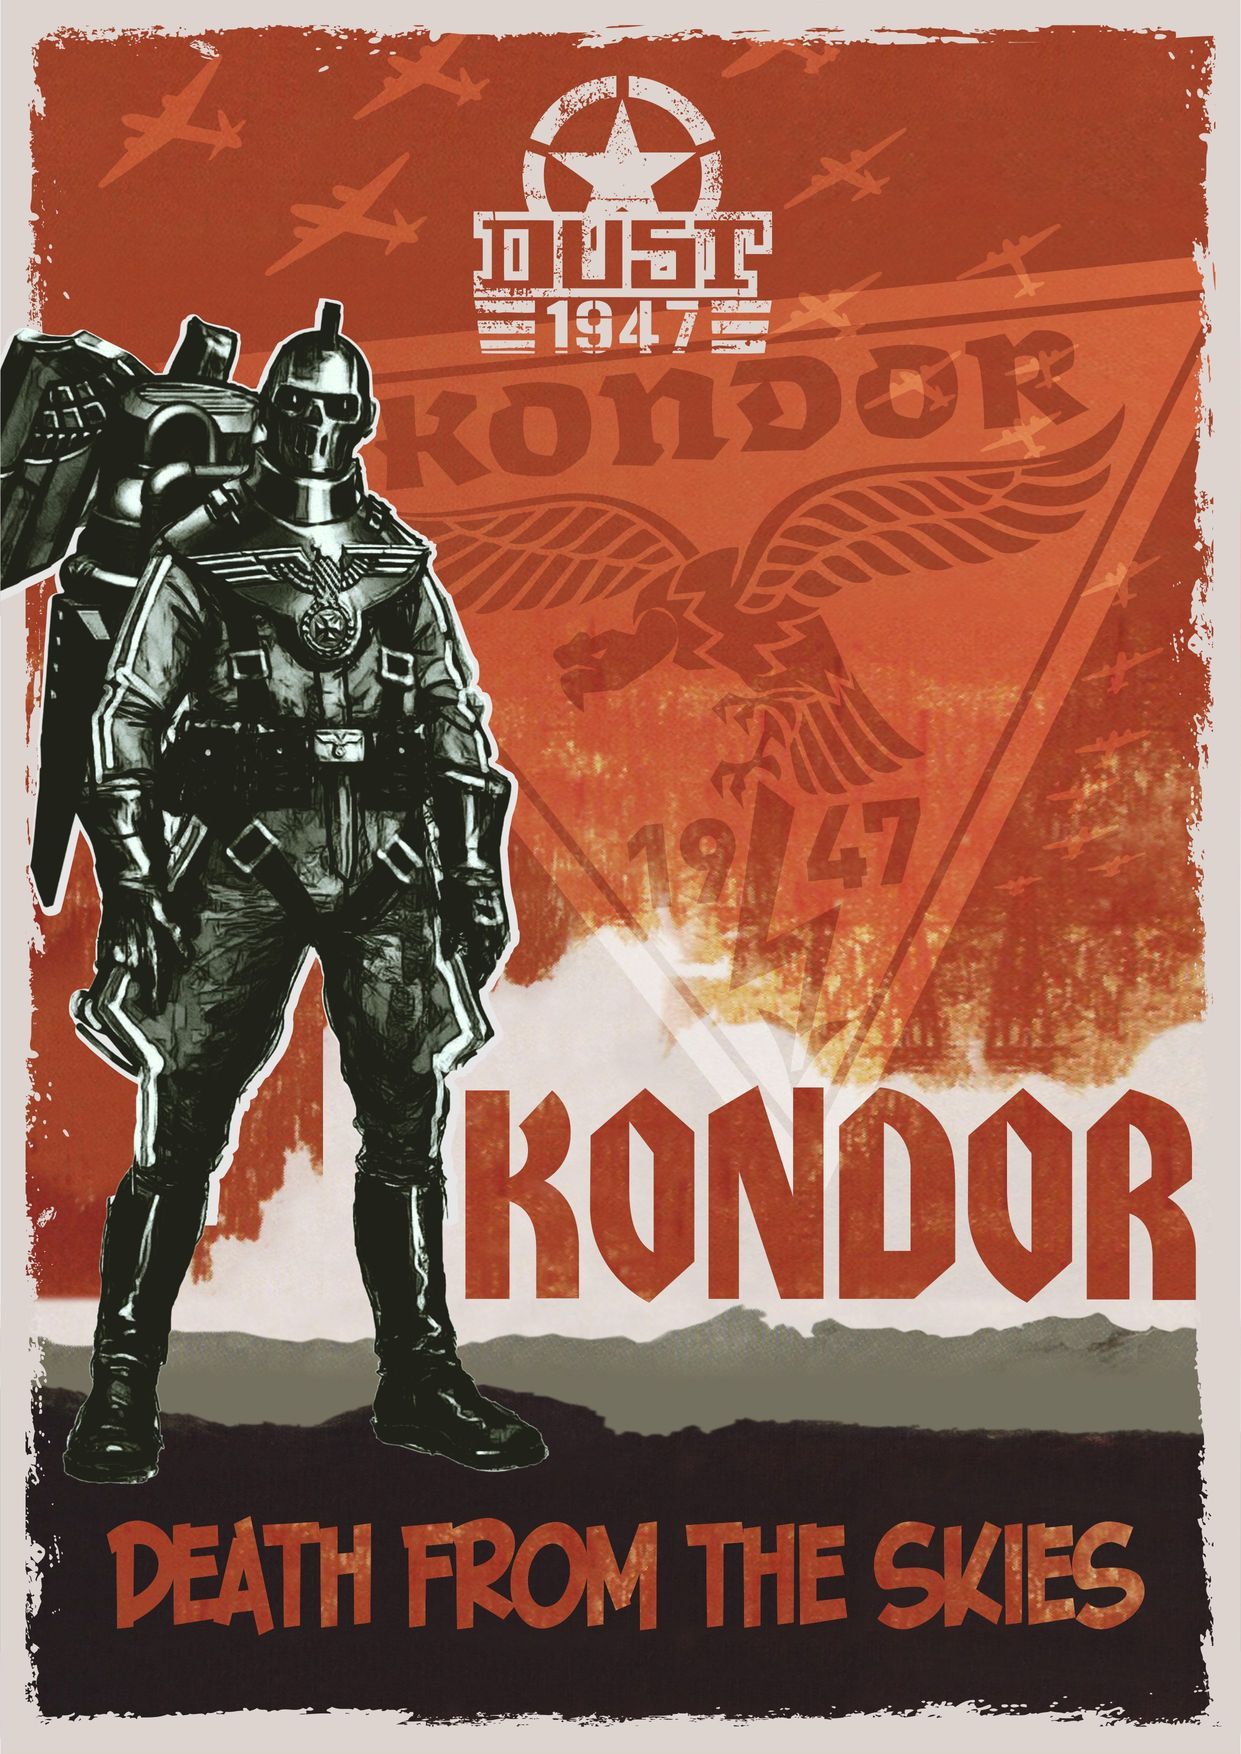 Dust 1947: Operation Kondor